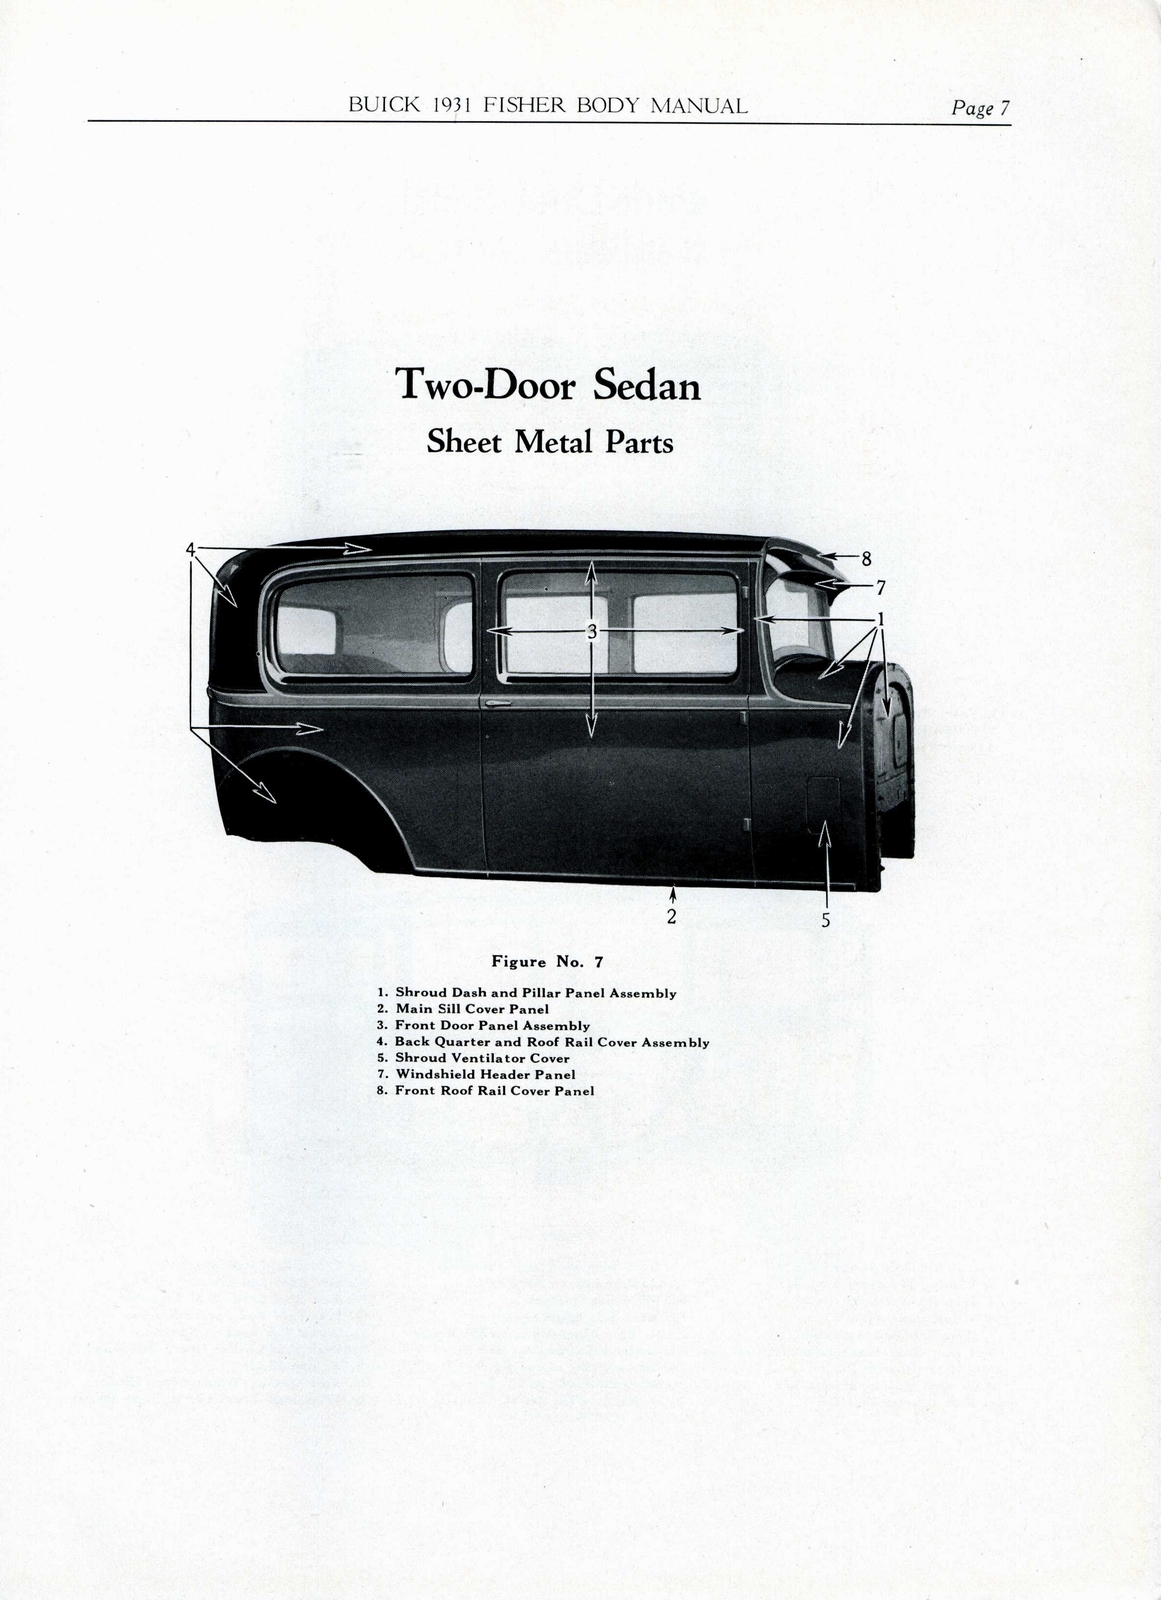 n_1931 Buick Fisher Body Manual-07.jpg